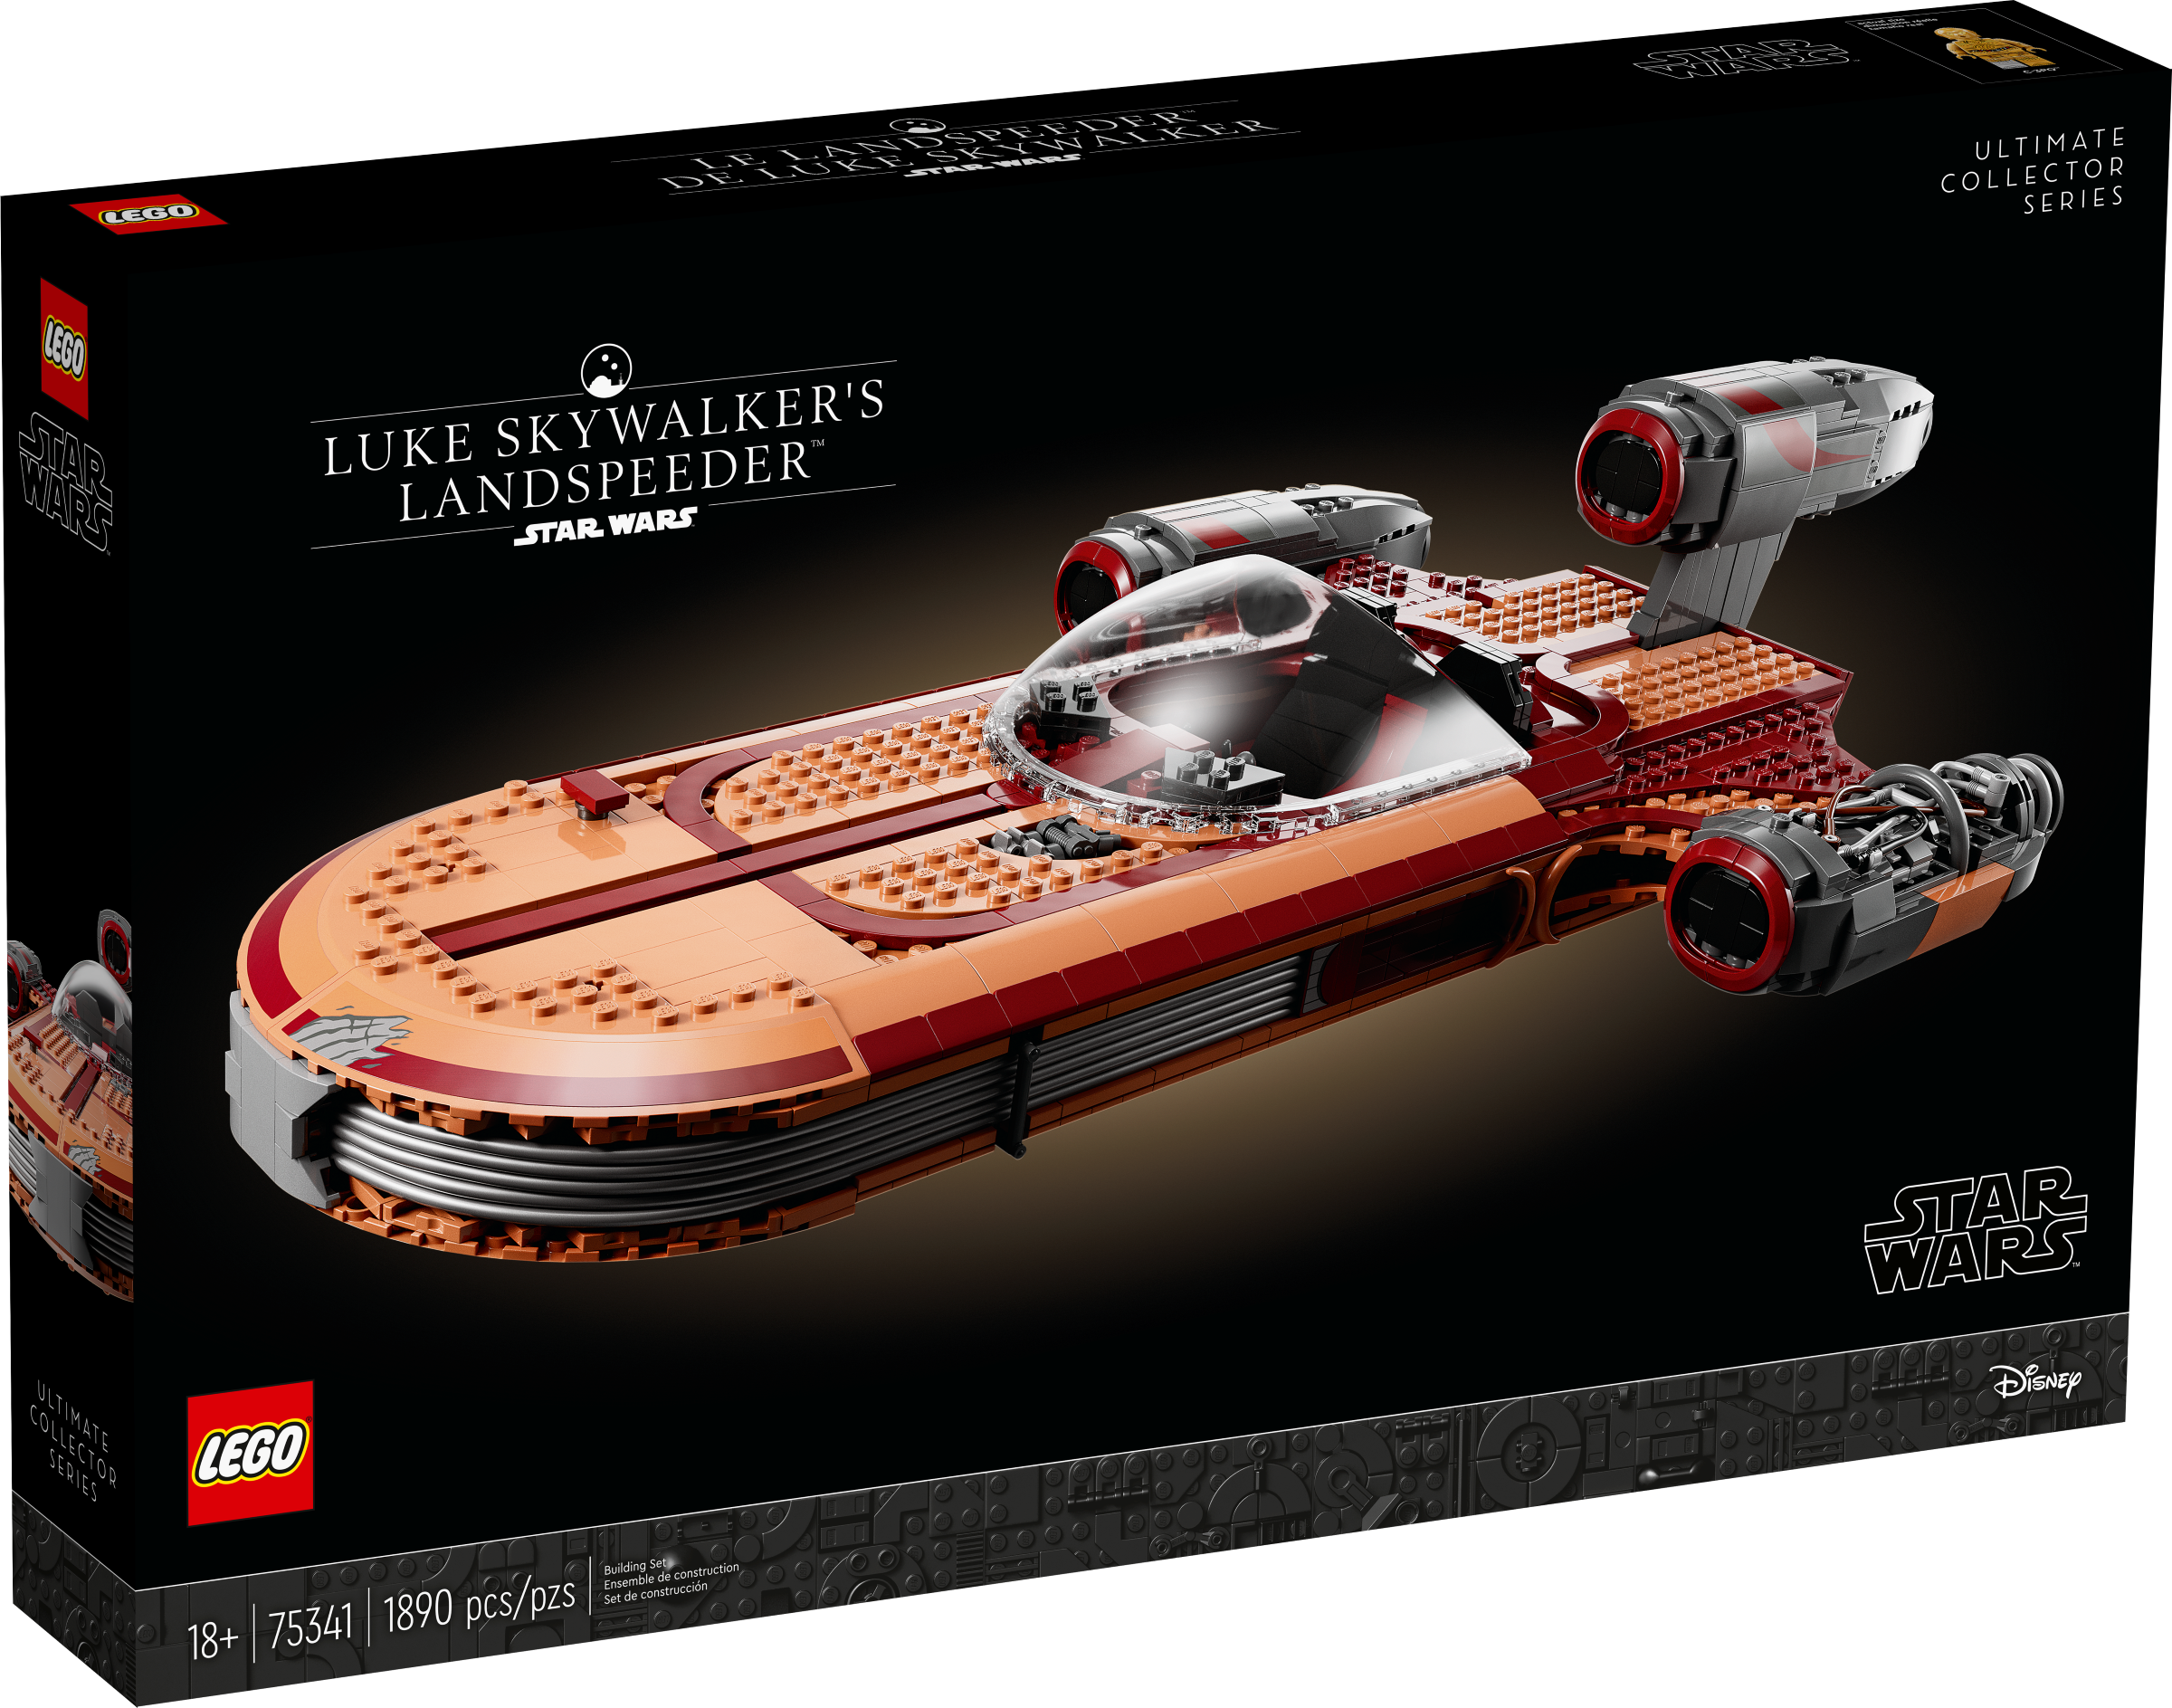 Luke Skywalker's Landspeeder™ 75341, Star Wars™